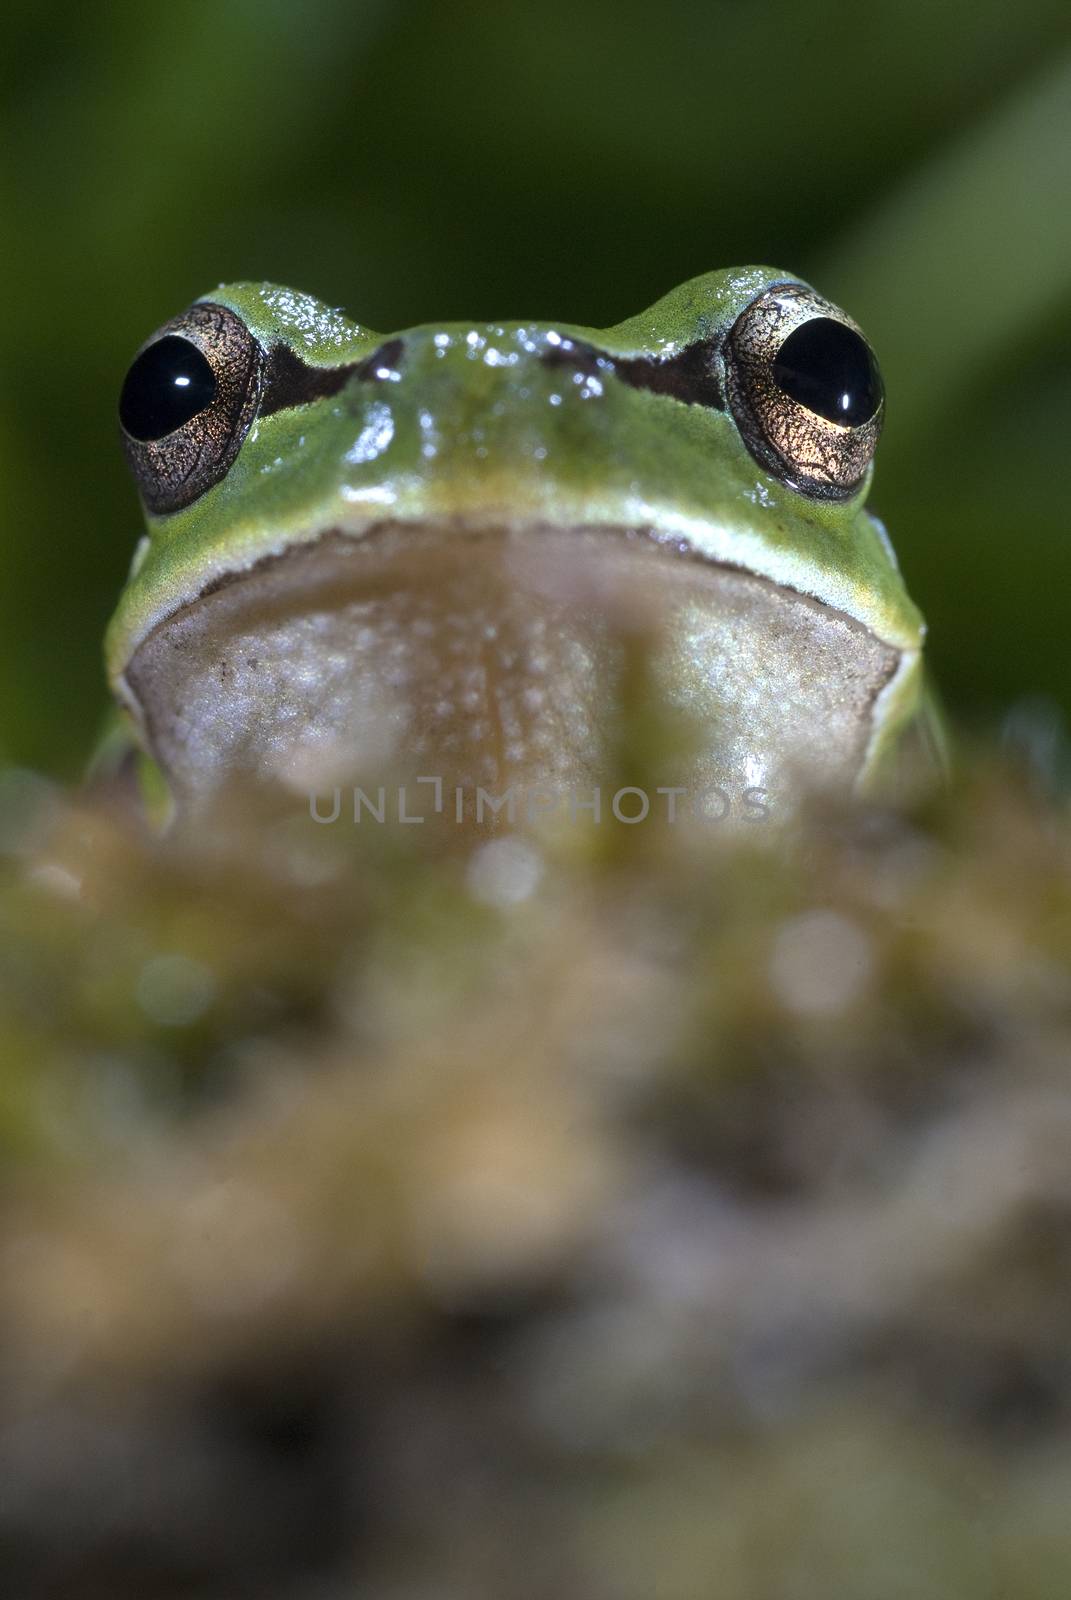 Nice amphibian green European tree frog, Hyla arborea, details o by jalonsohu@gmail.com